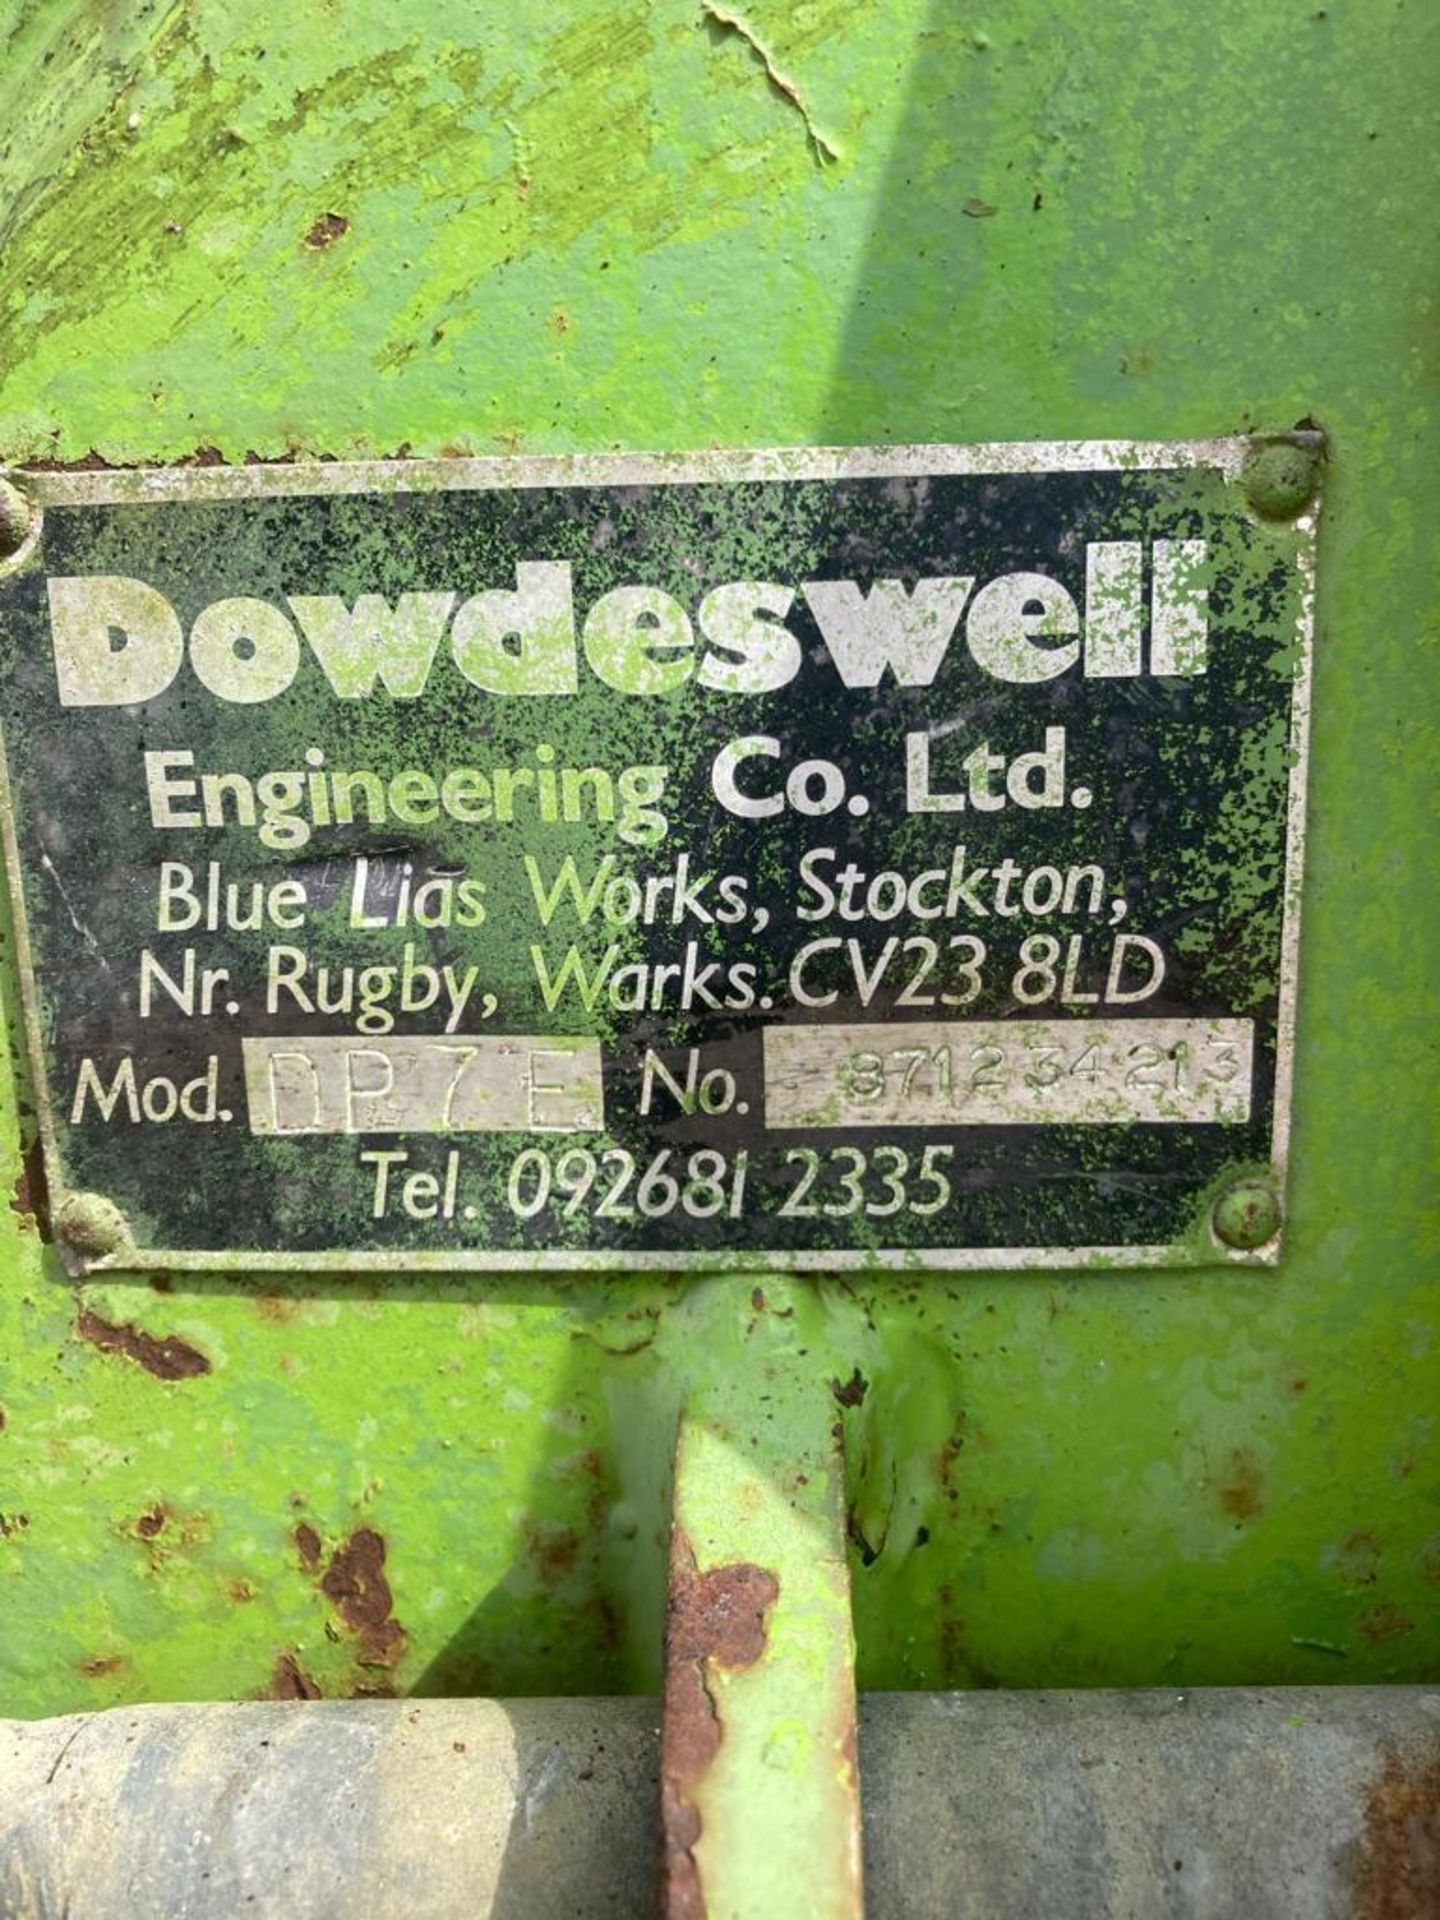 Dowdeswell DP7E 6 Furrow Plough - (Cambridgeshire) - Image 5 of 5